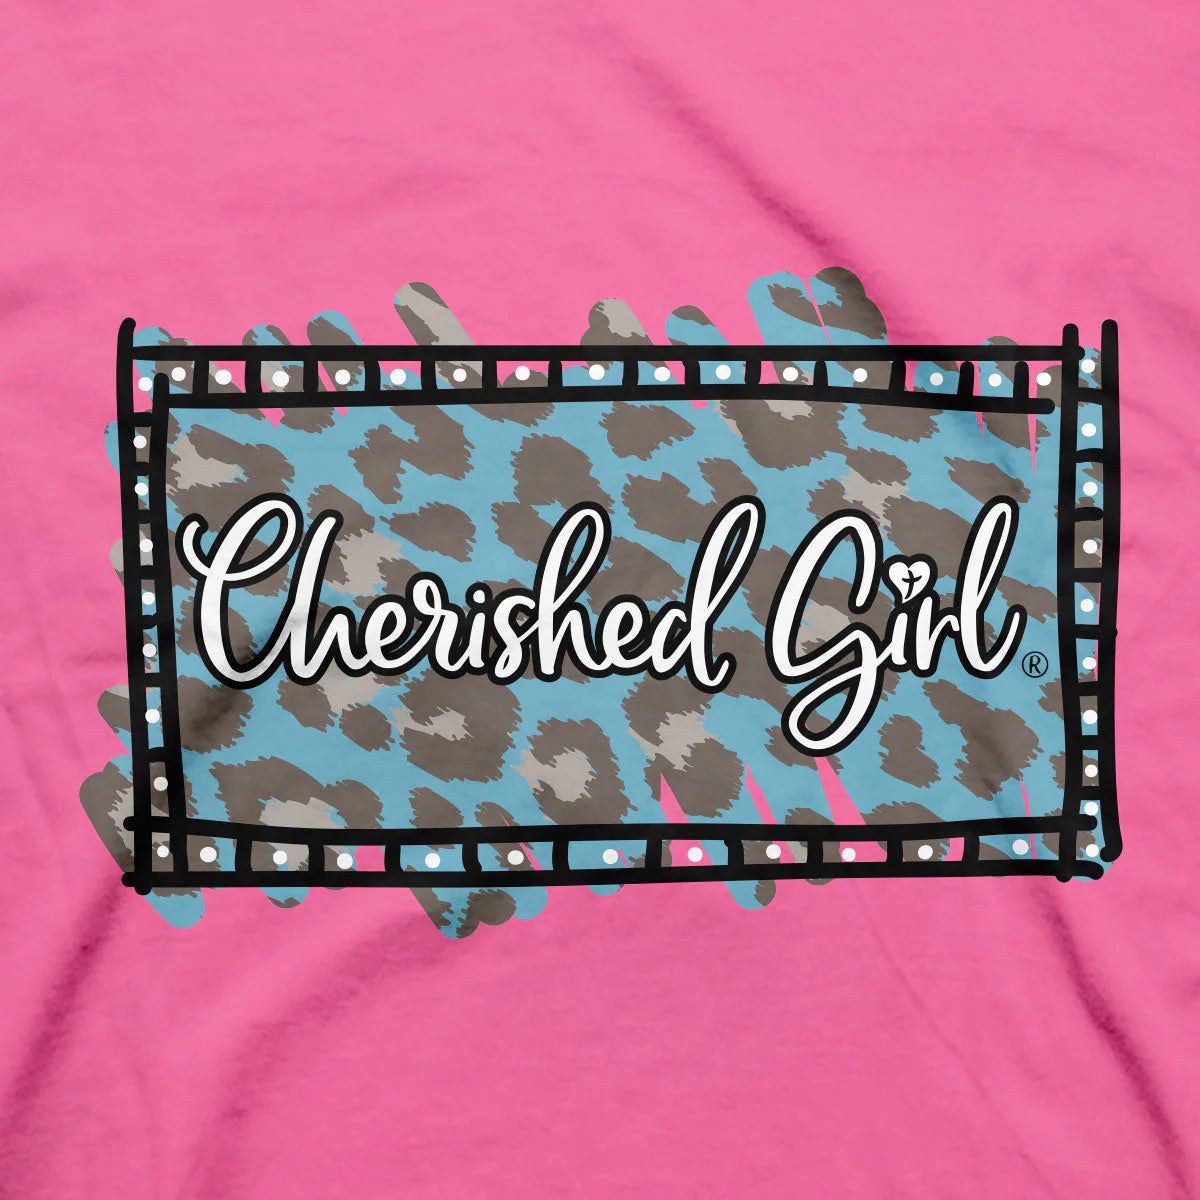 Cherished Girl Womens T-Shirt Leopard Cross Cherished Girl® Apparel Short Sleeve T-shirts Top Seller Women's